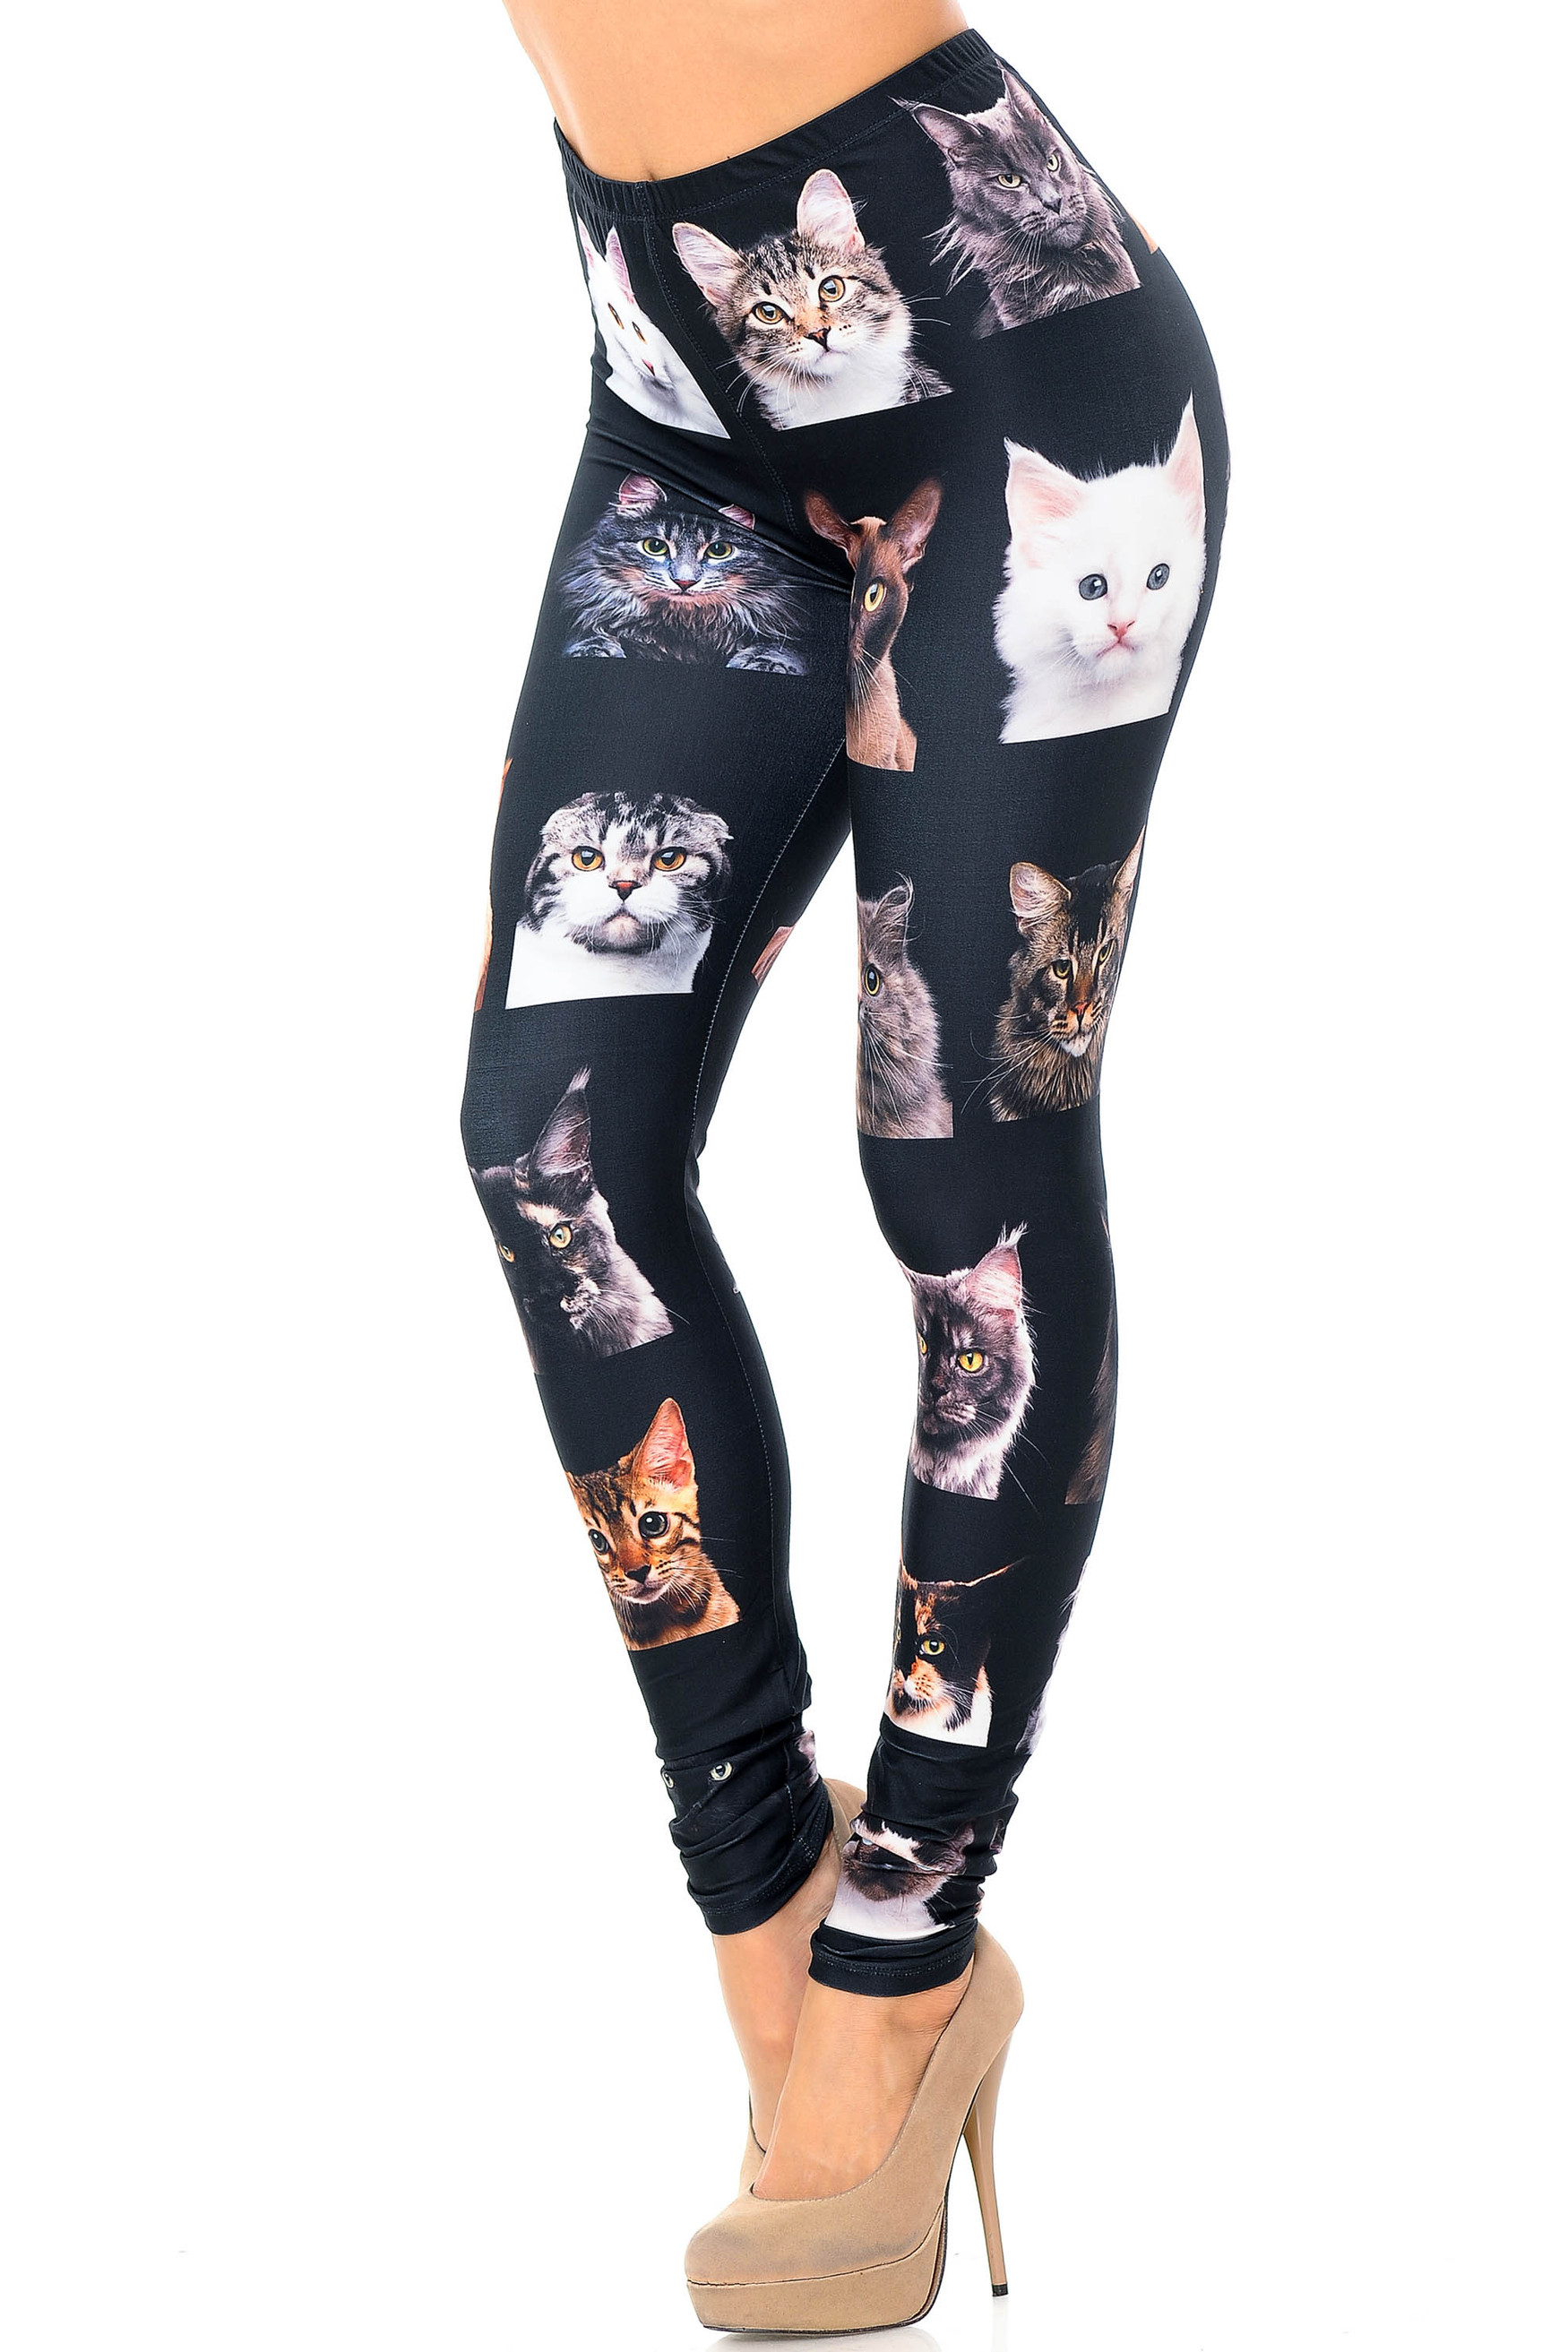 Creamy Soft Cute Kitty Cat Faces Leggings - USA Fashion™